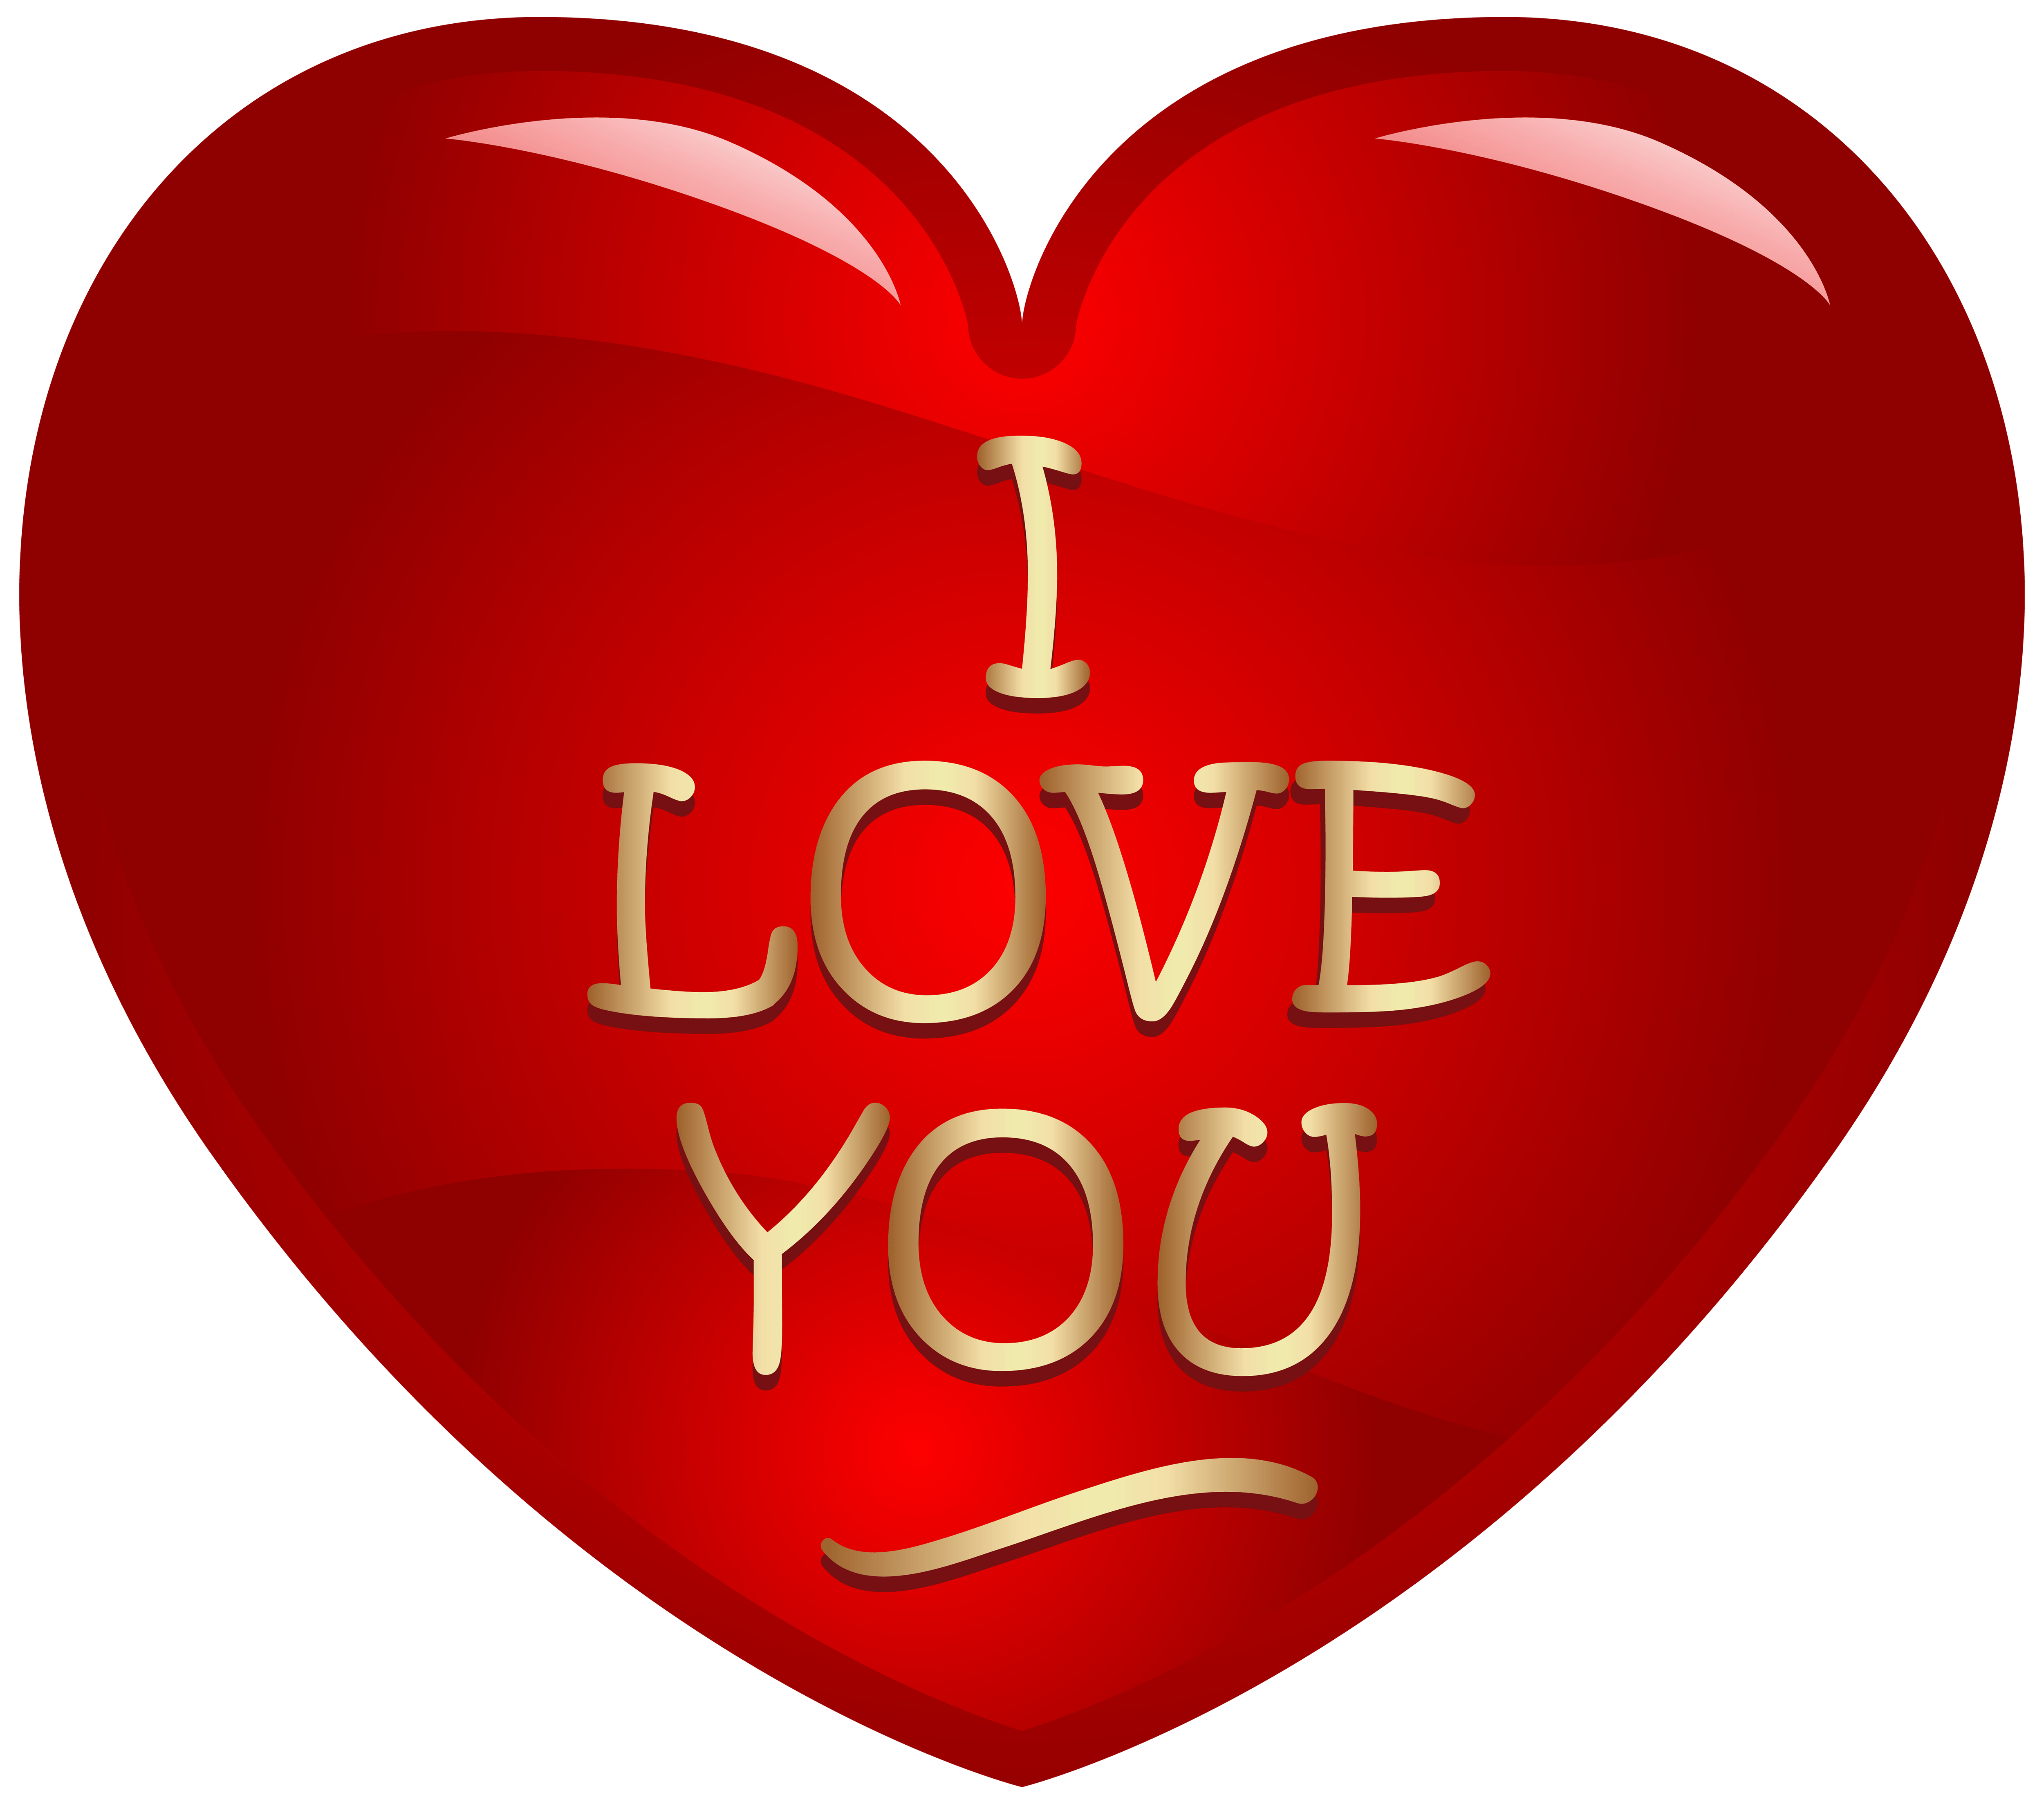 I Love You Heart Logo - I Love U PNG HD Transparent I Love U HD.PNG Images. | PlusPNG